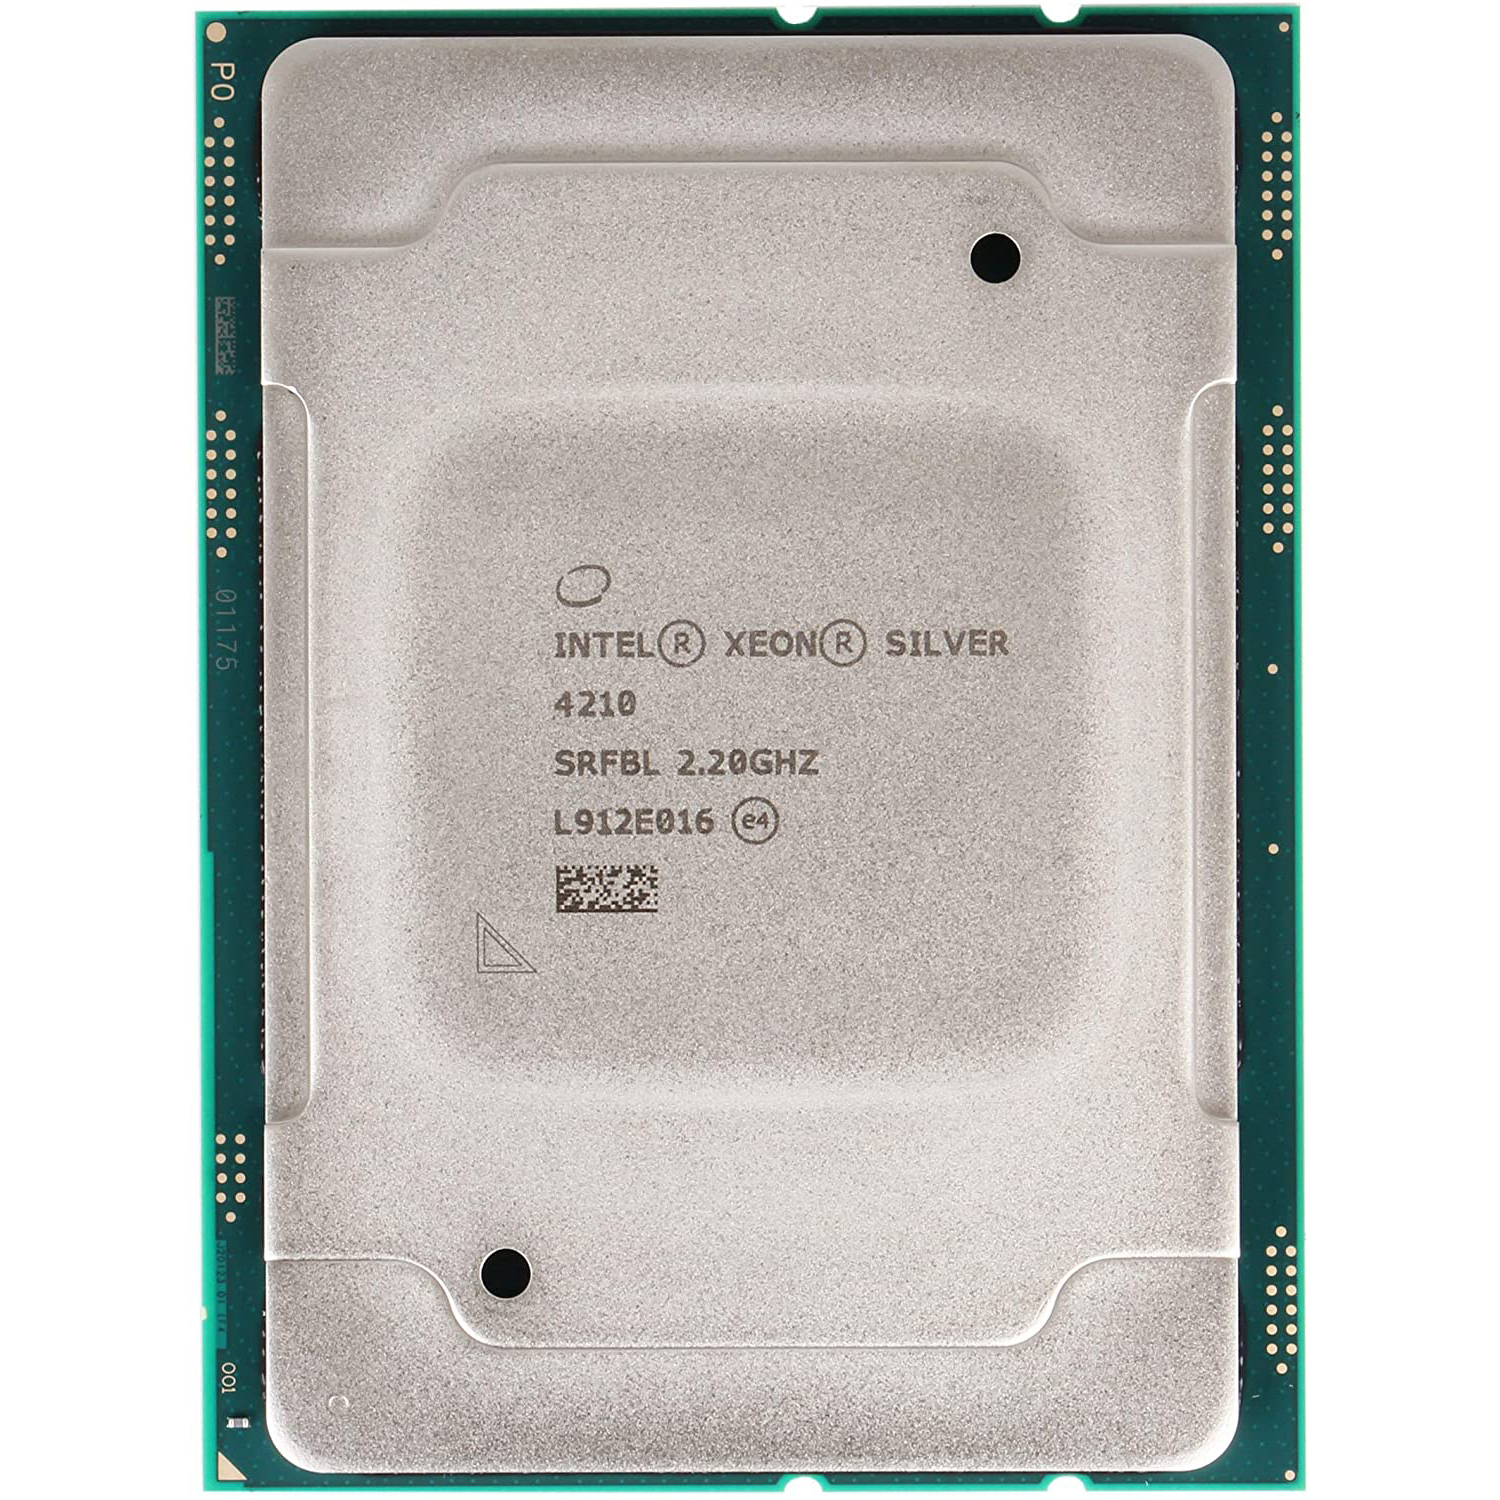 Processor HPE DL380 Gen10 Intel Xeon-Silver 4210 (2.2GHz/10-core/85W) Kit (P02492-B21) FOR SERVER, Server CPU